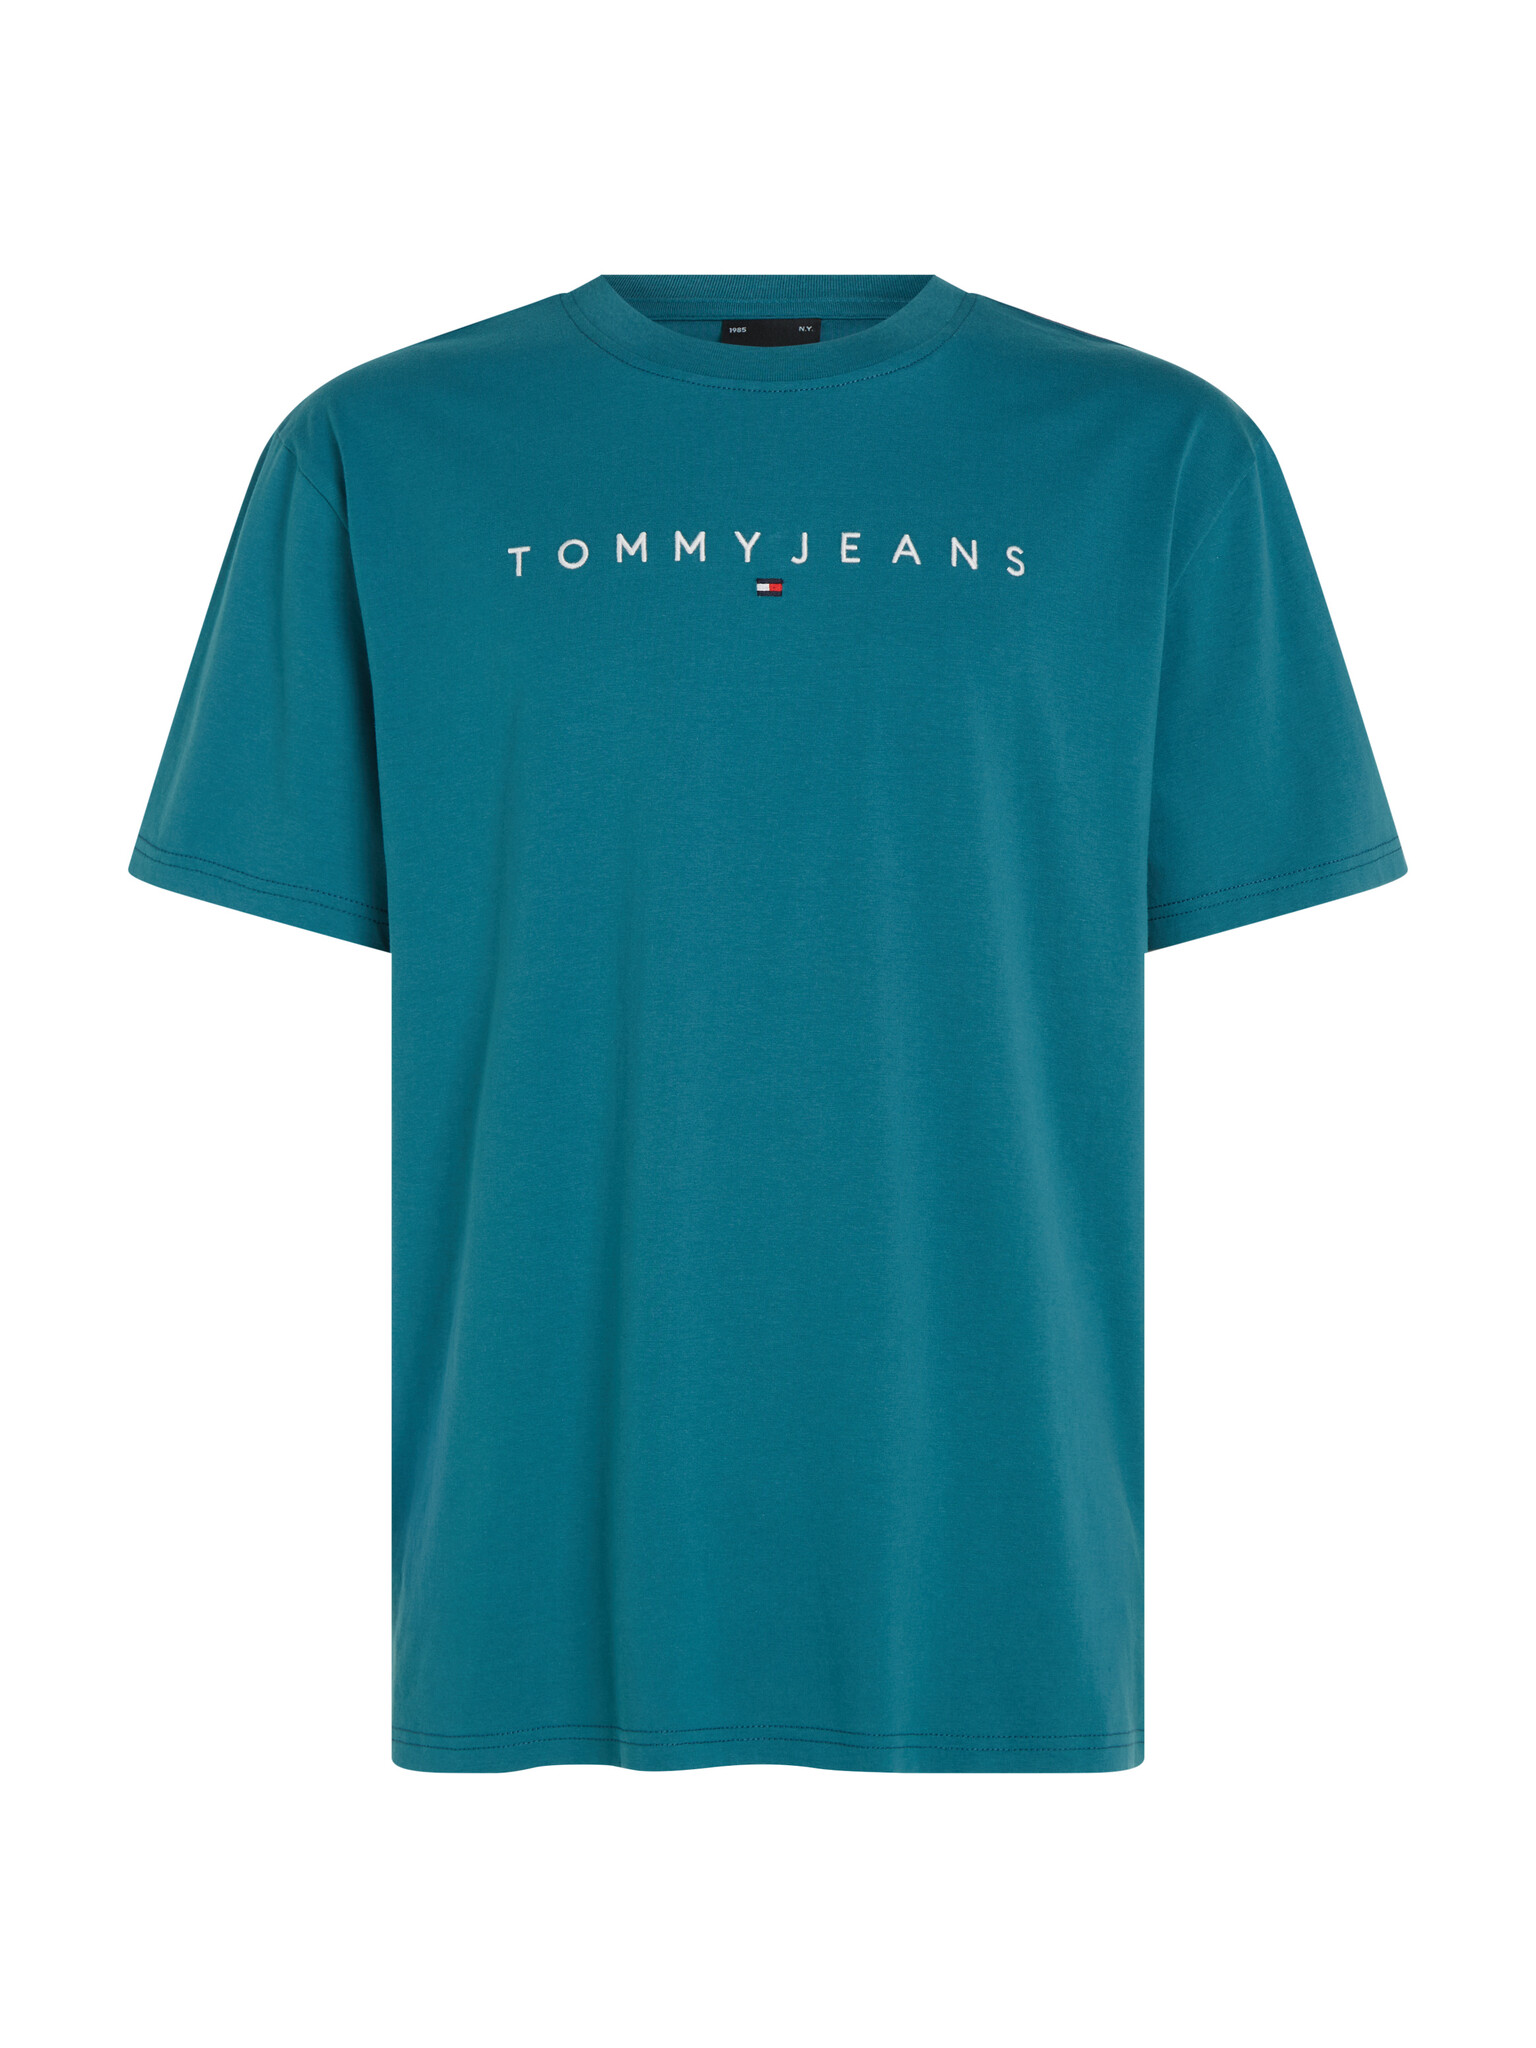 Tommy Hilfiger T-shirt Timeless Teal 